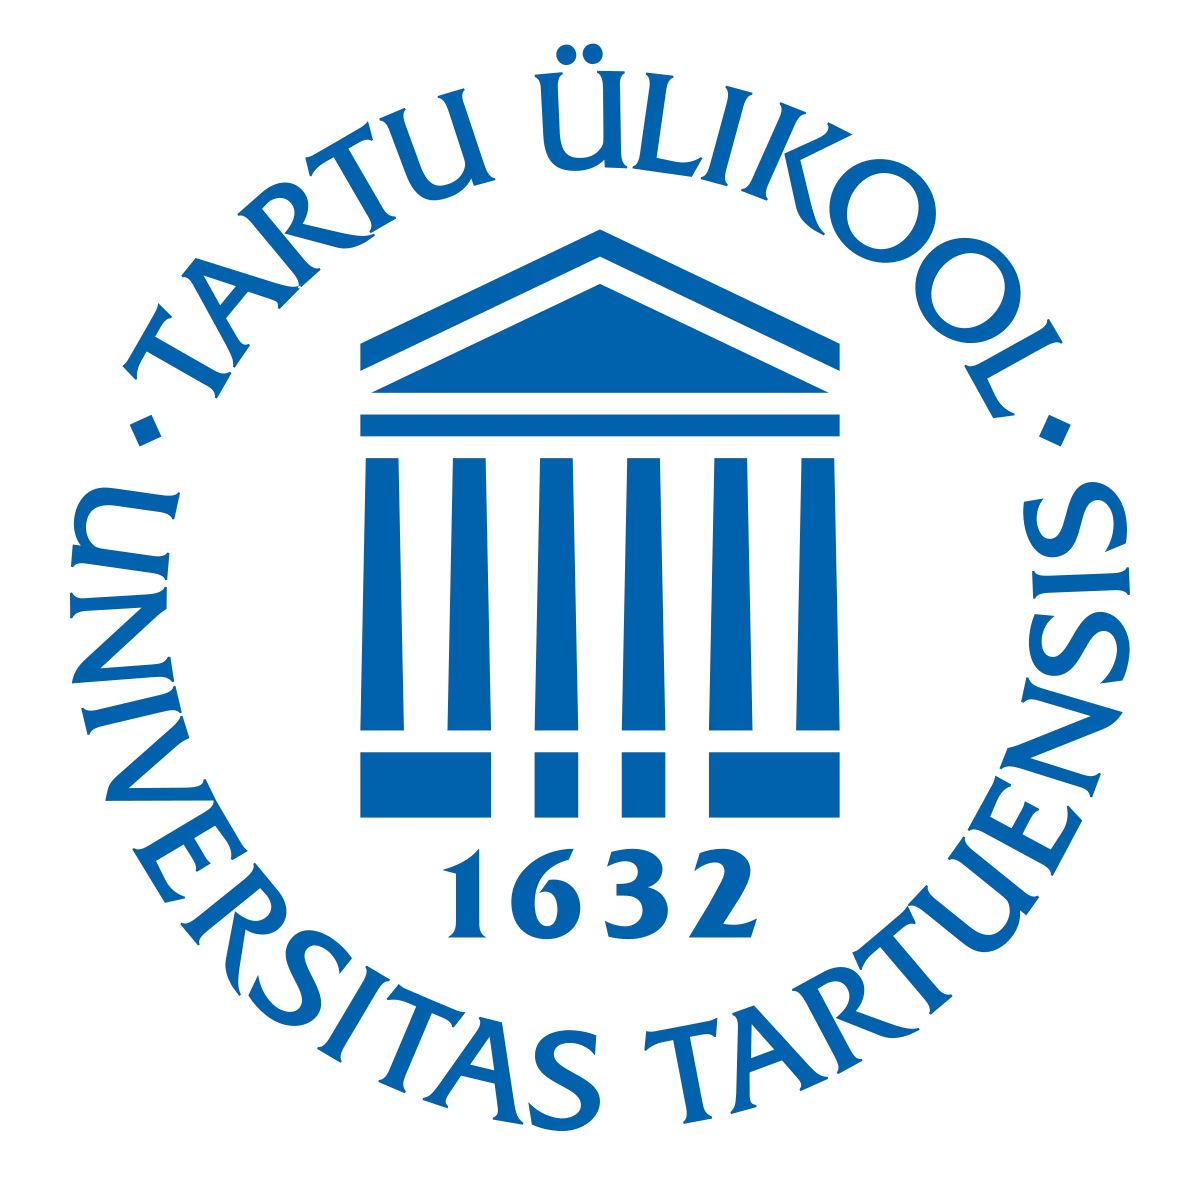 Estonia University of Tartu 336 Tuition Waiver Scholarships 2018